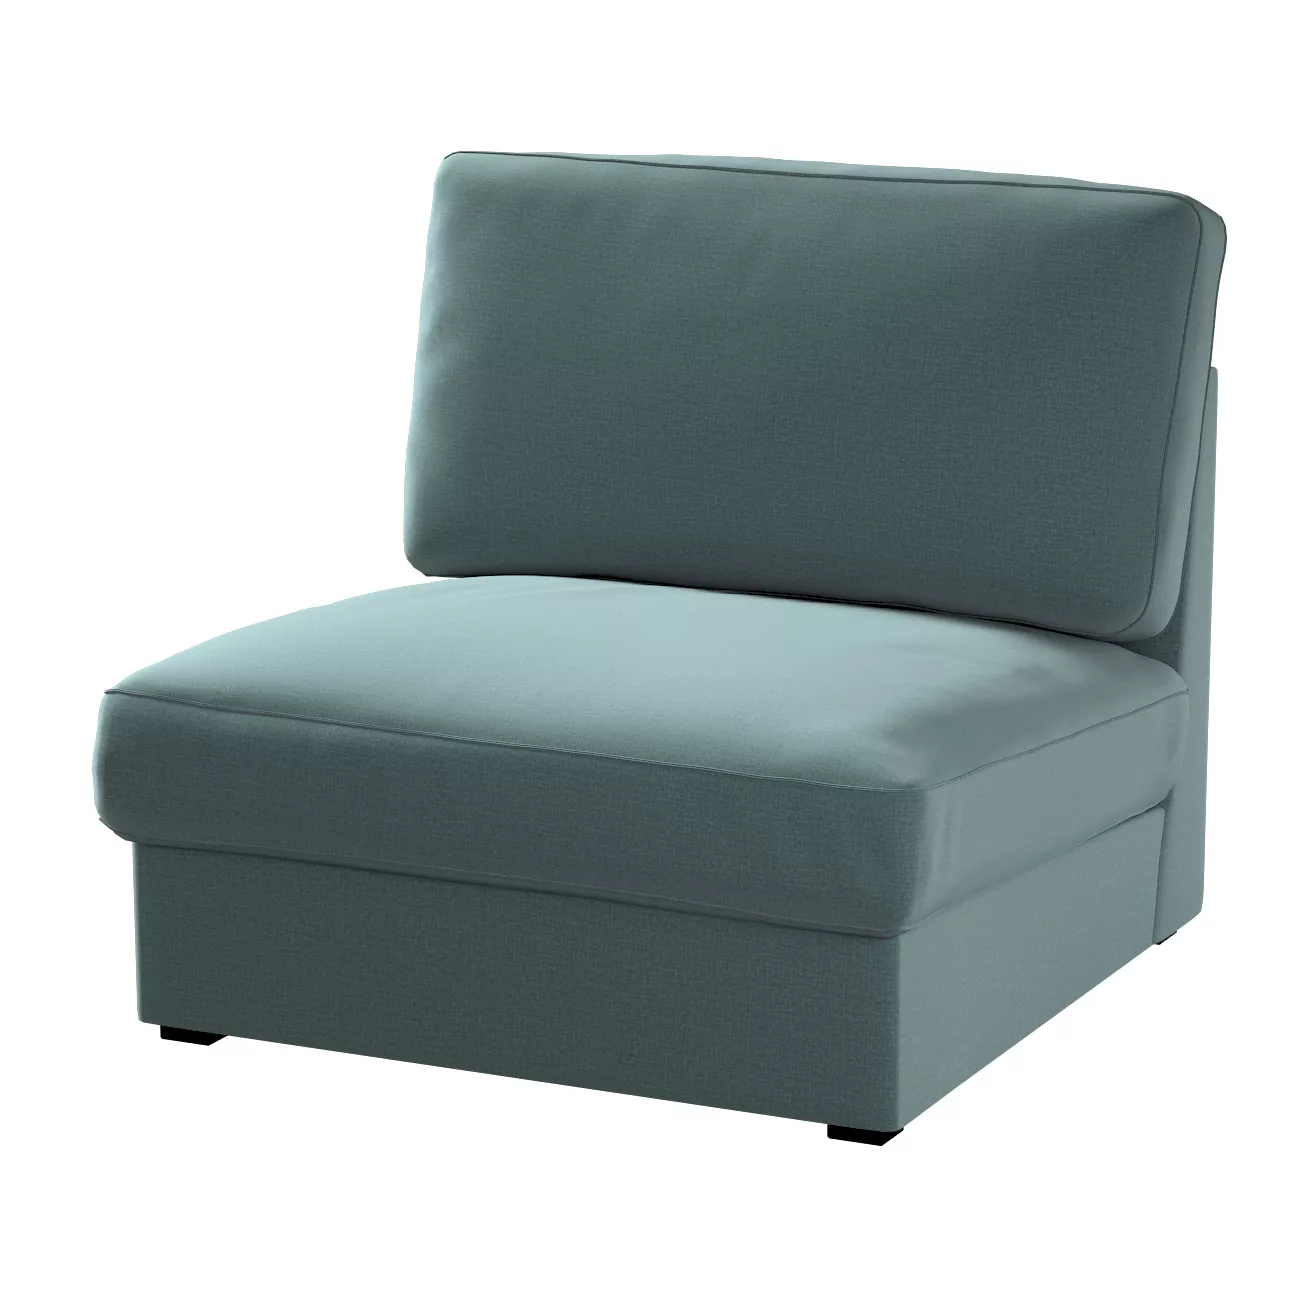 Bezug für Kivik Sessel nicht ausklappbar, smaragdgrün, Bezug für Sessel Kiv günstig online kaufen